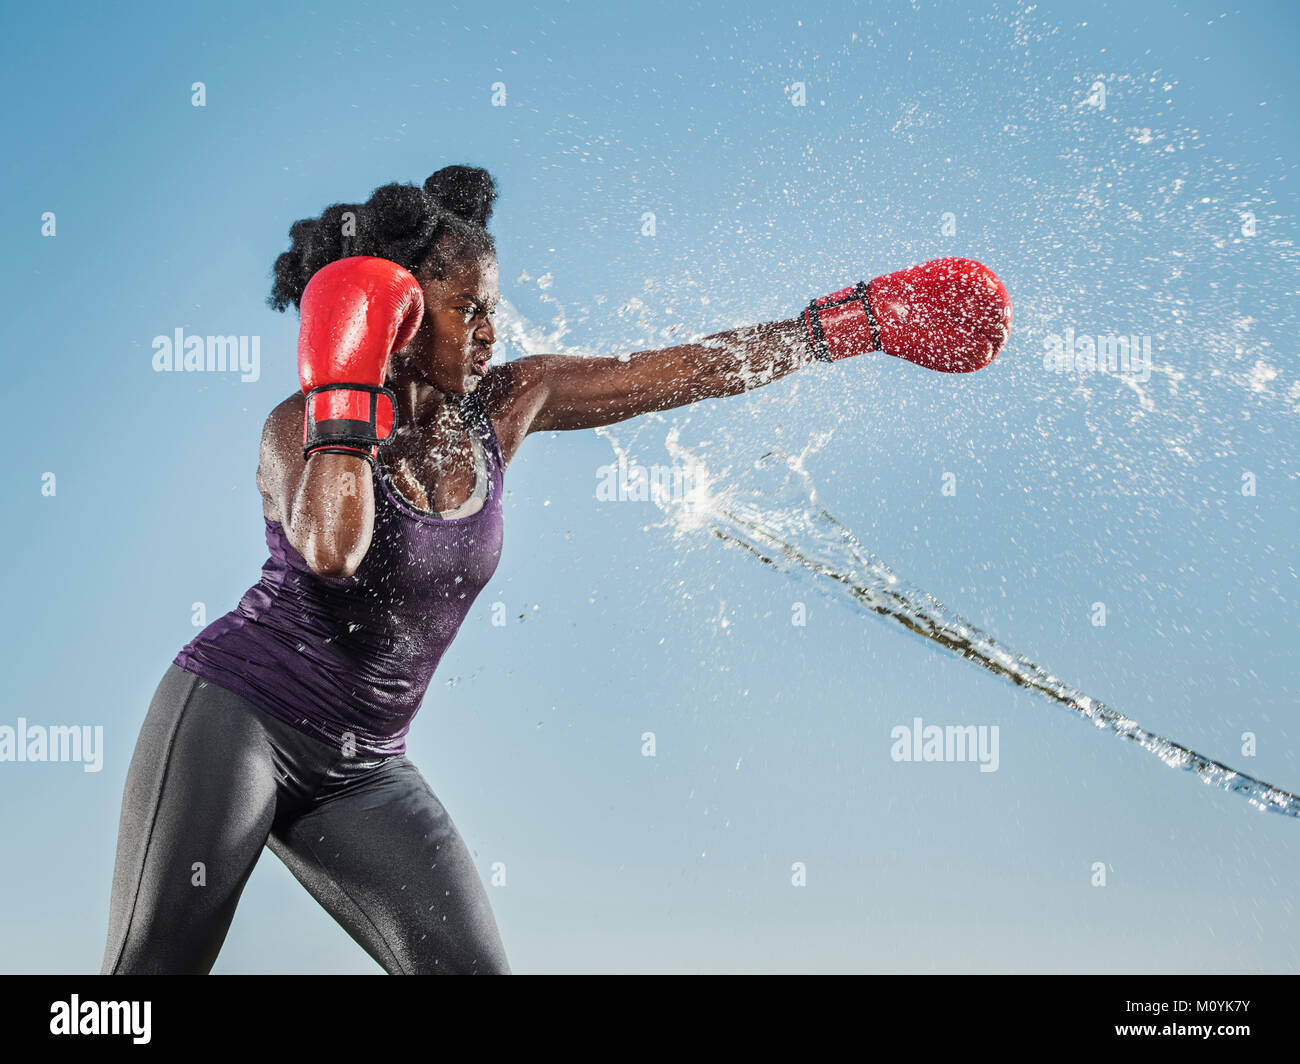 Water spraying on black woman boxing Stock Photo